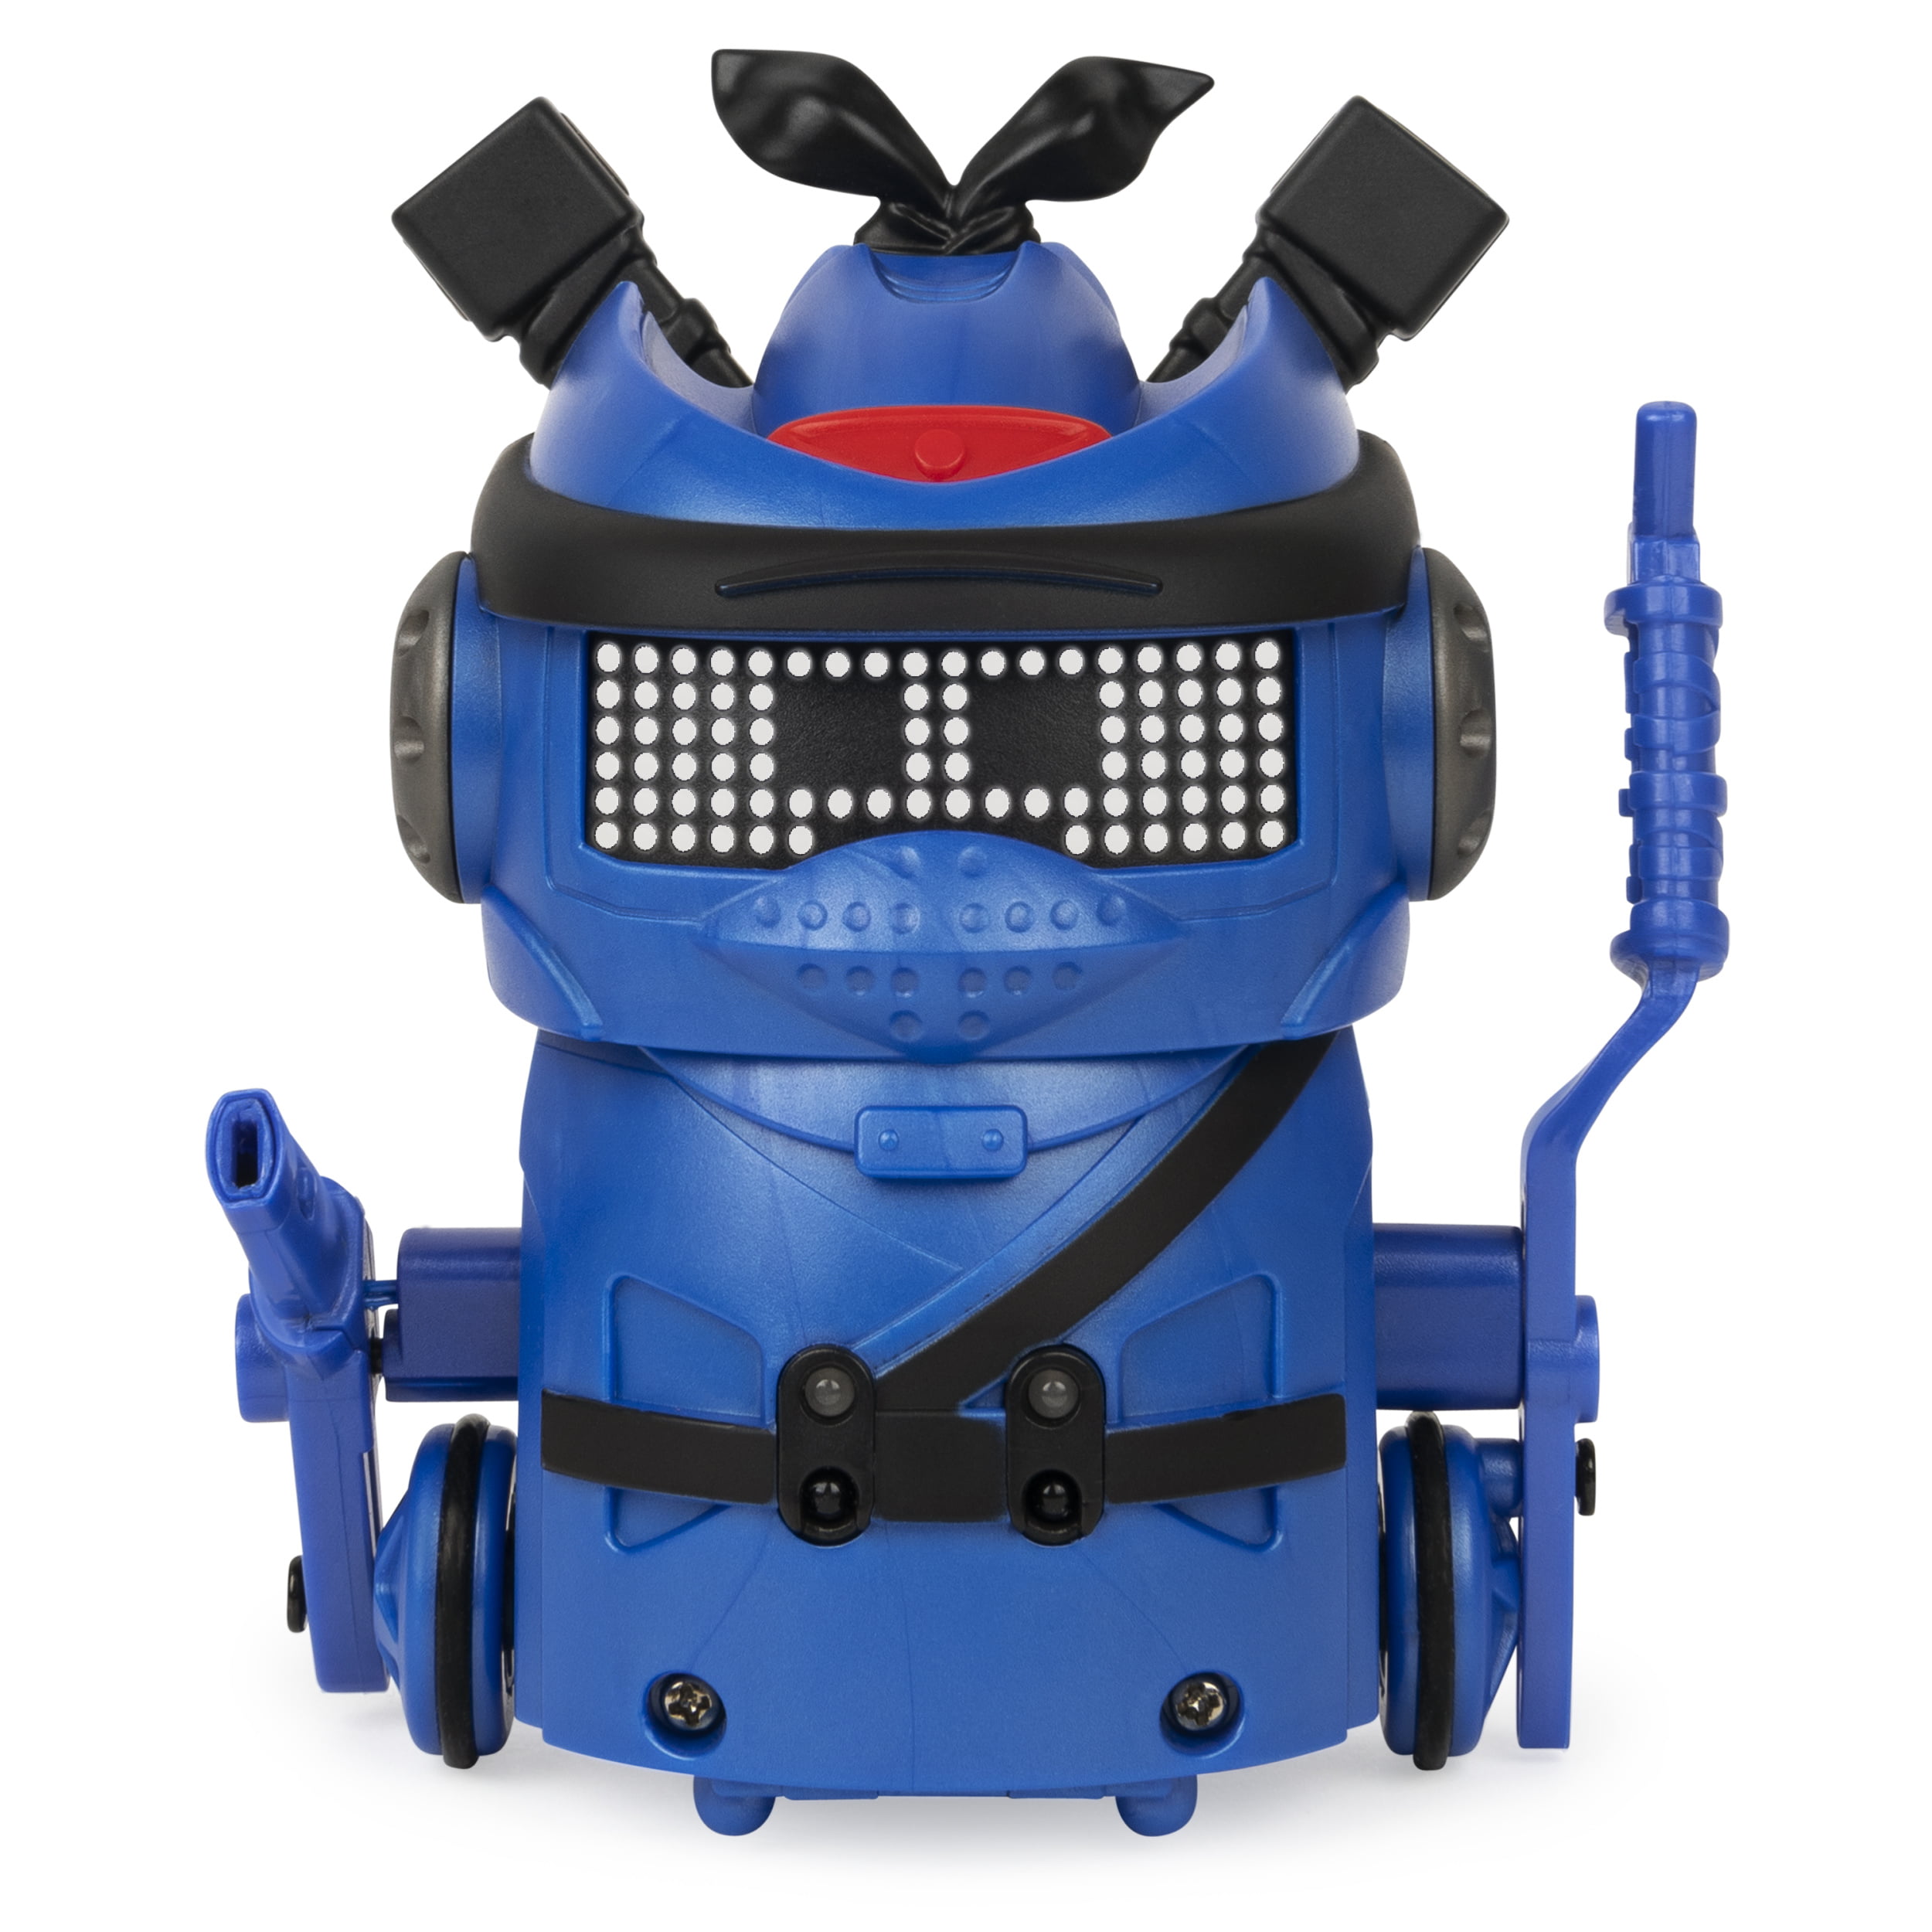 Ninjabots Hilarious Battling Robots 6 Weapons Over 100 Sounds Movements 2 Pack